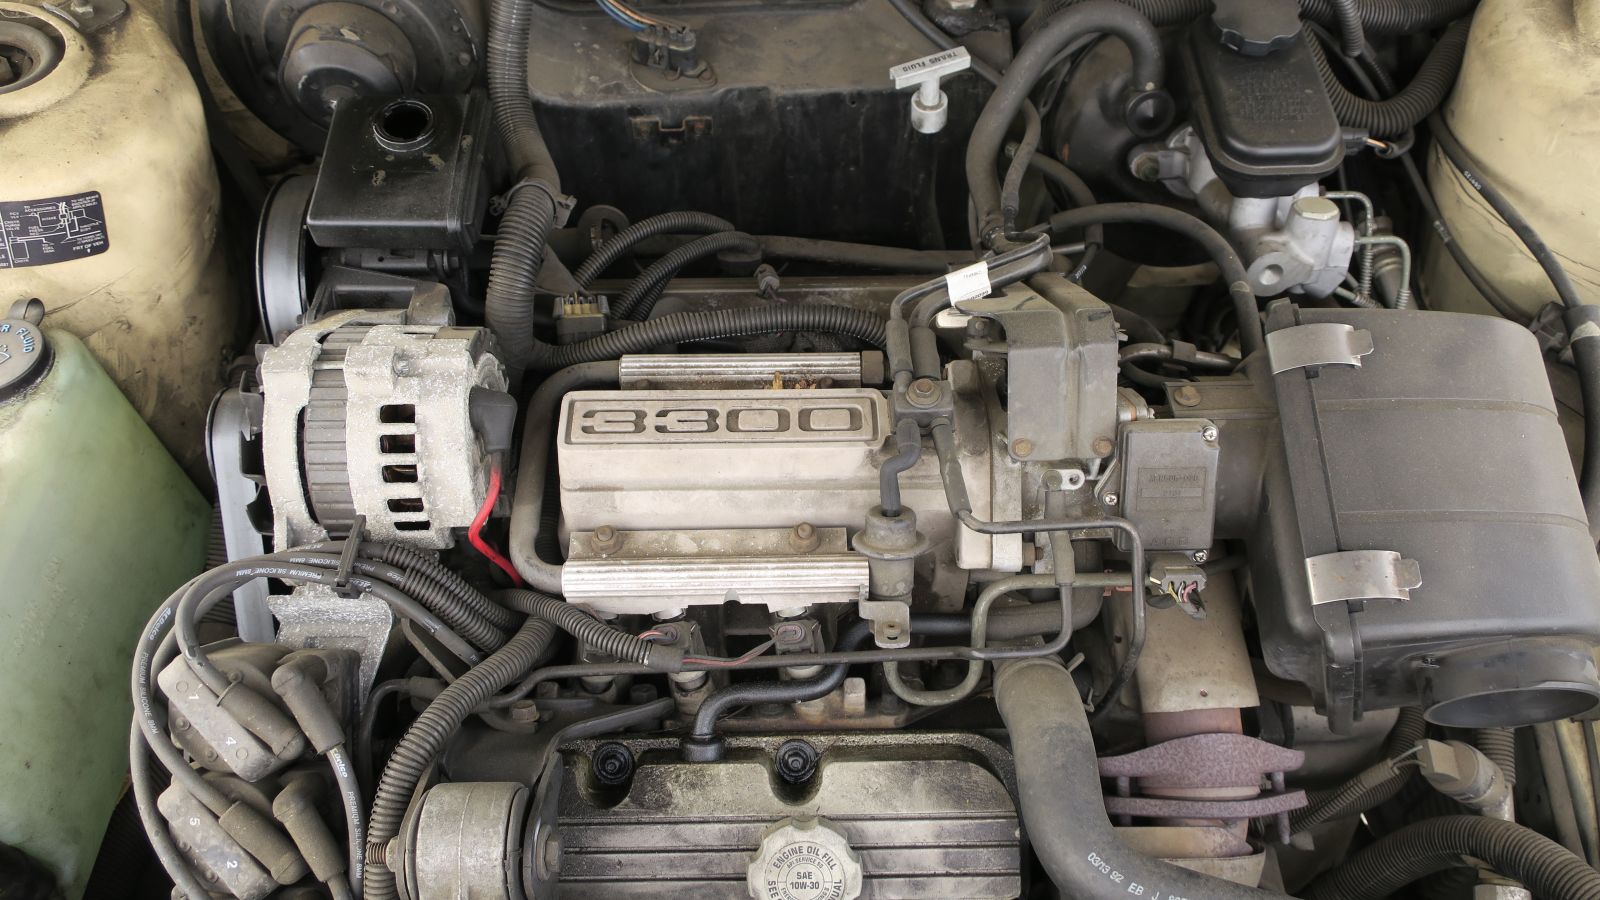 Junkyard Gem: 1992 Buick Century Woodie station wagon 1992 Buick Century Engine 3.3 L V6